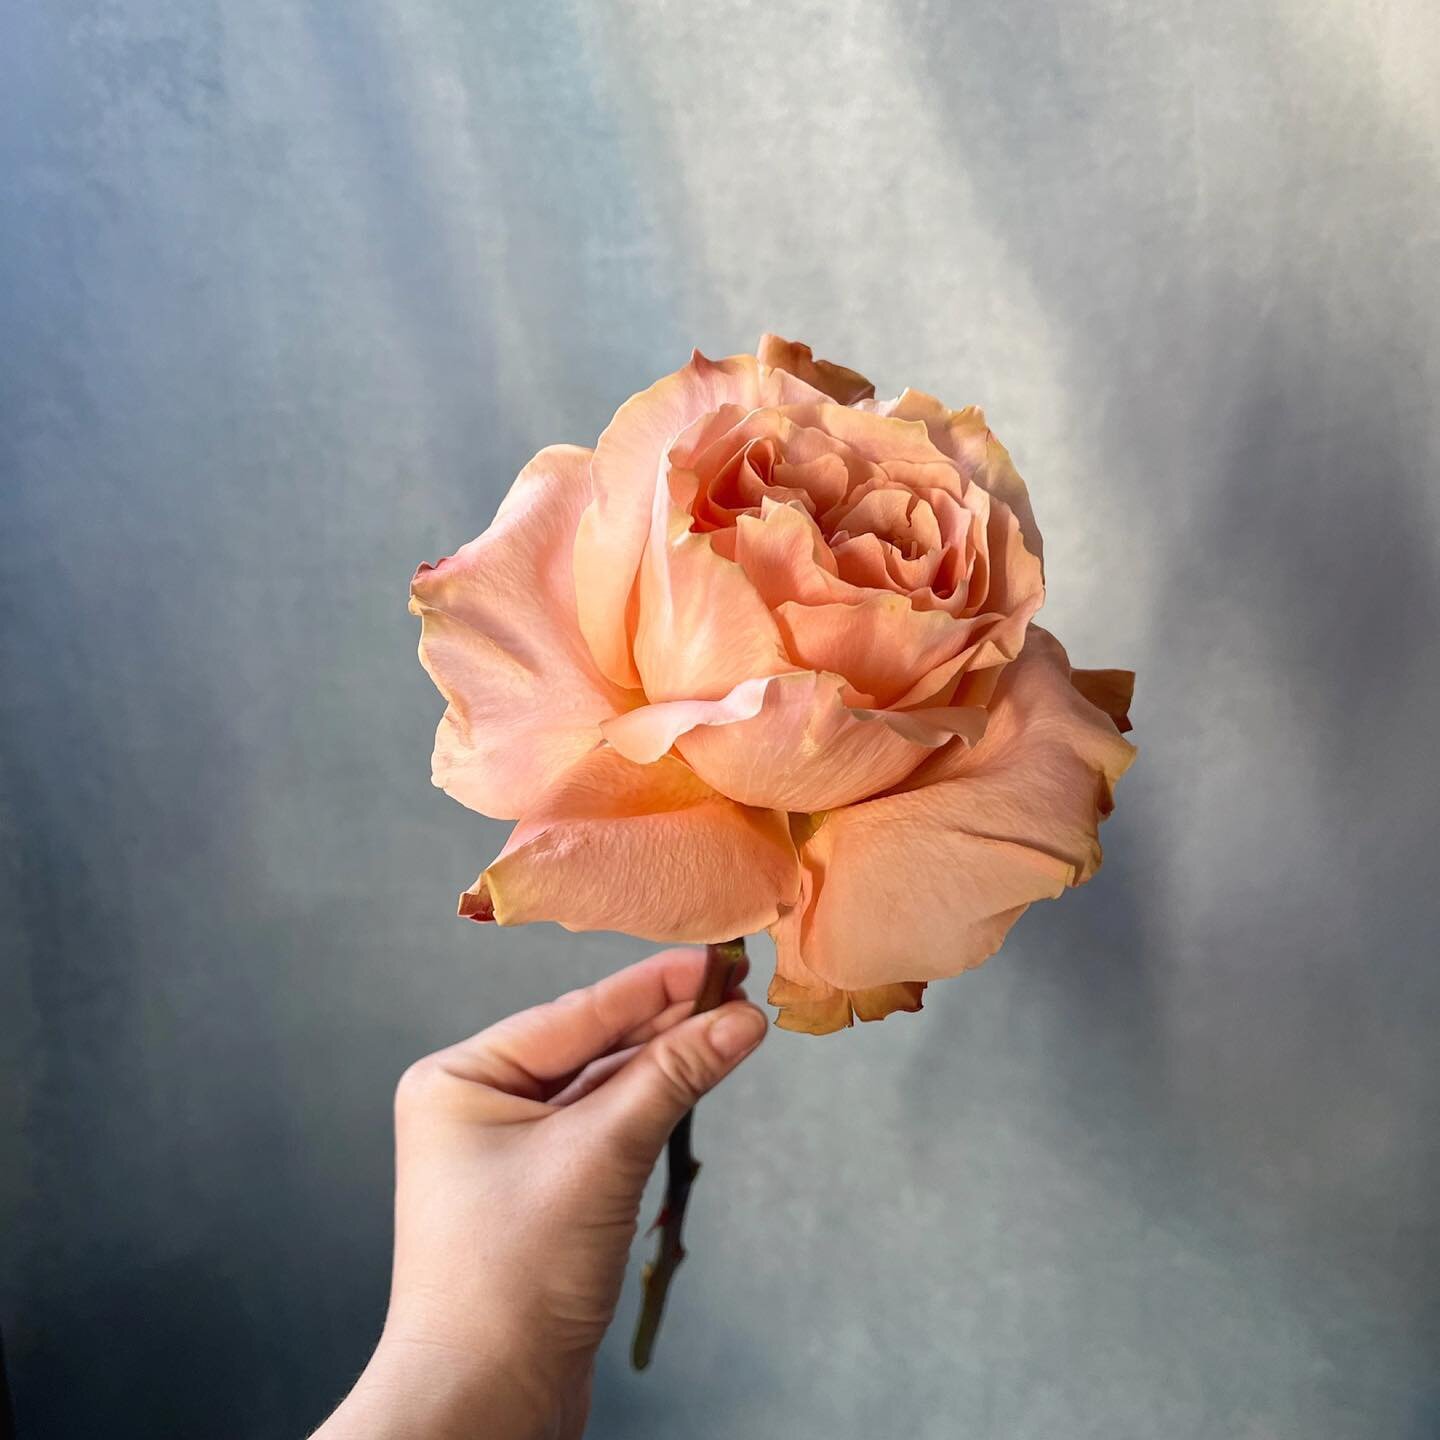 Royalty in full bloom 👑

This 👸Princess Crown Rose has us captivated by her elegant beauty. 

 #romanceintheair #weddingflowers #loveinbloom #whimsicalwedding #weddinginspiration #phillylovestory